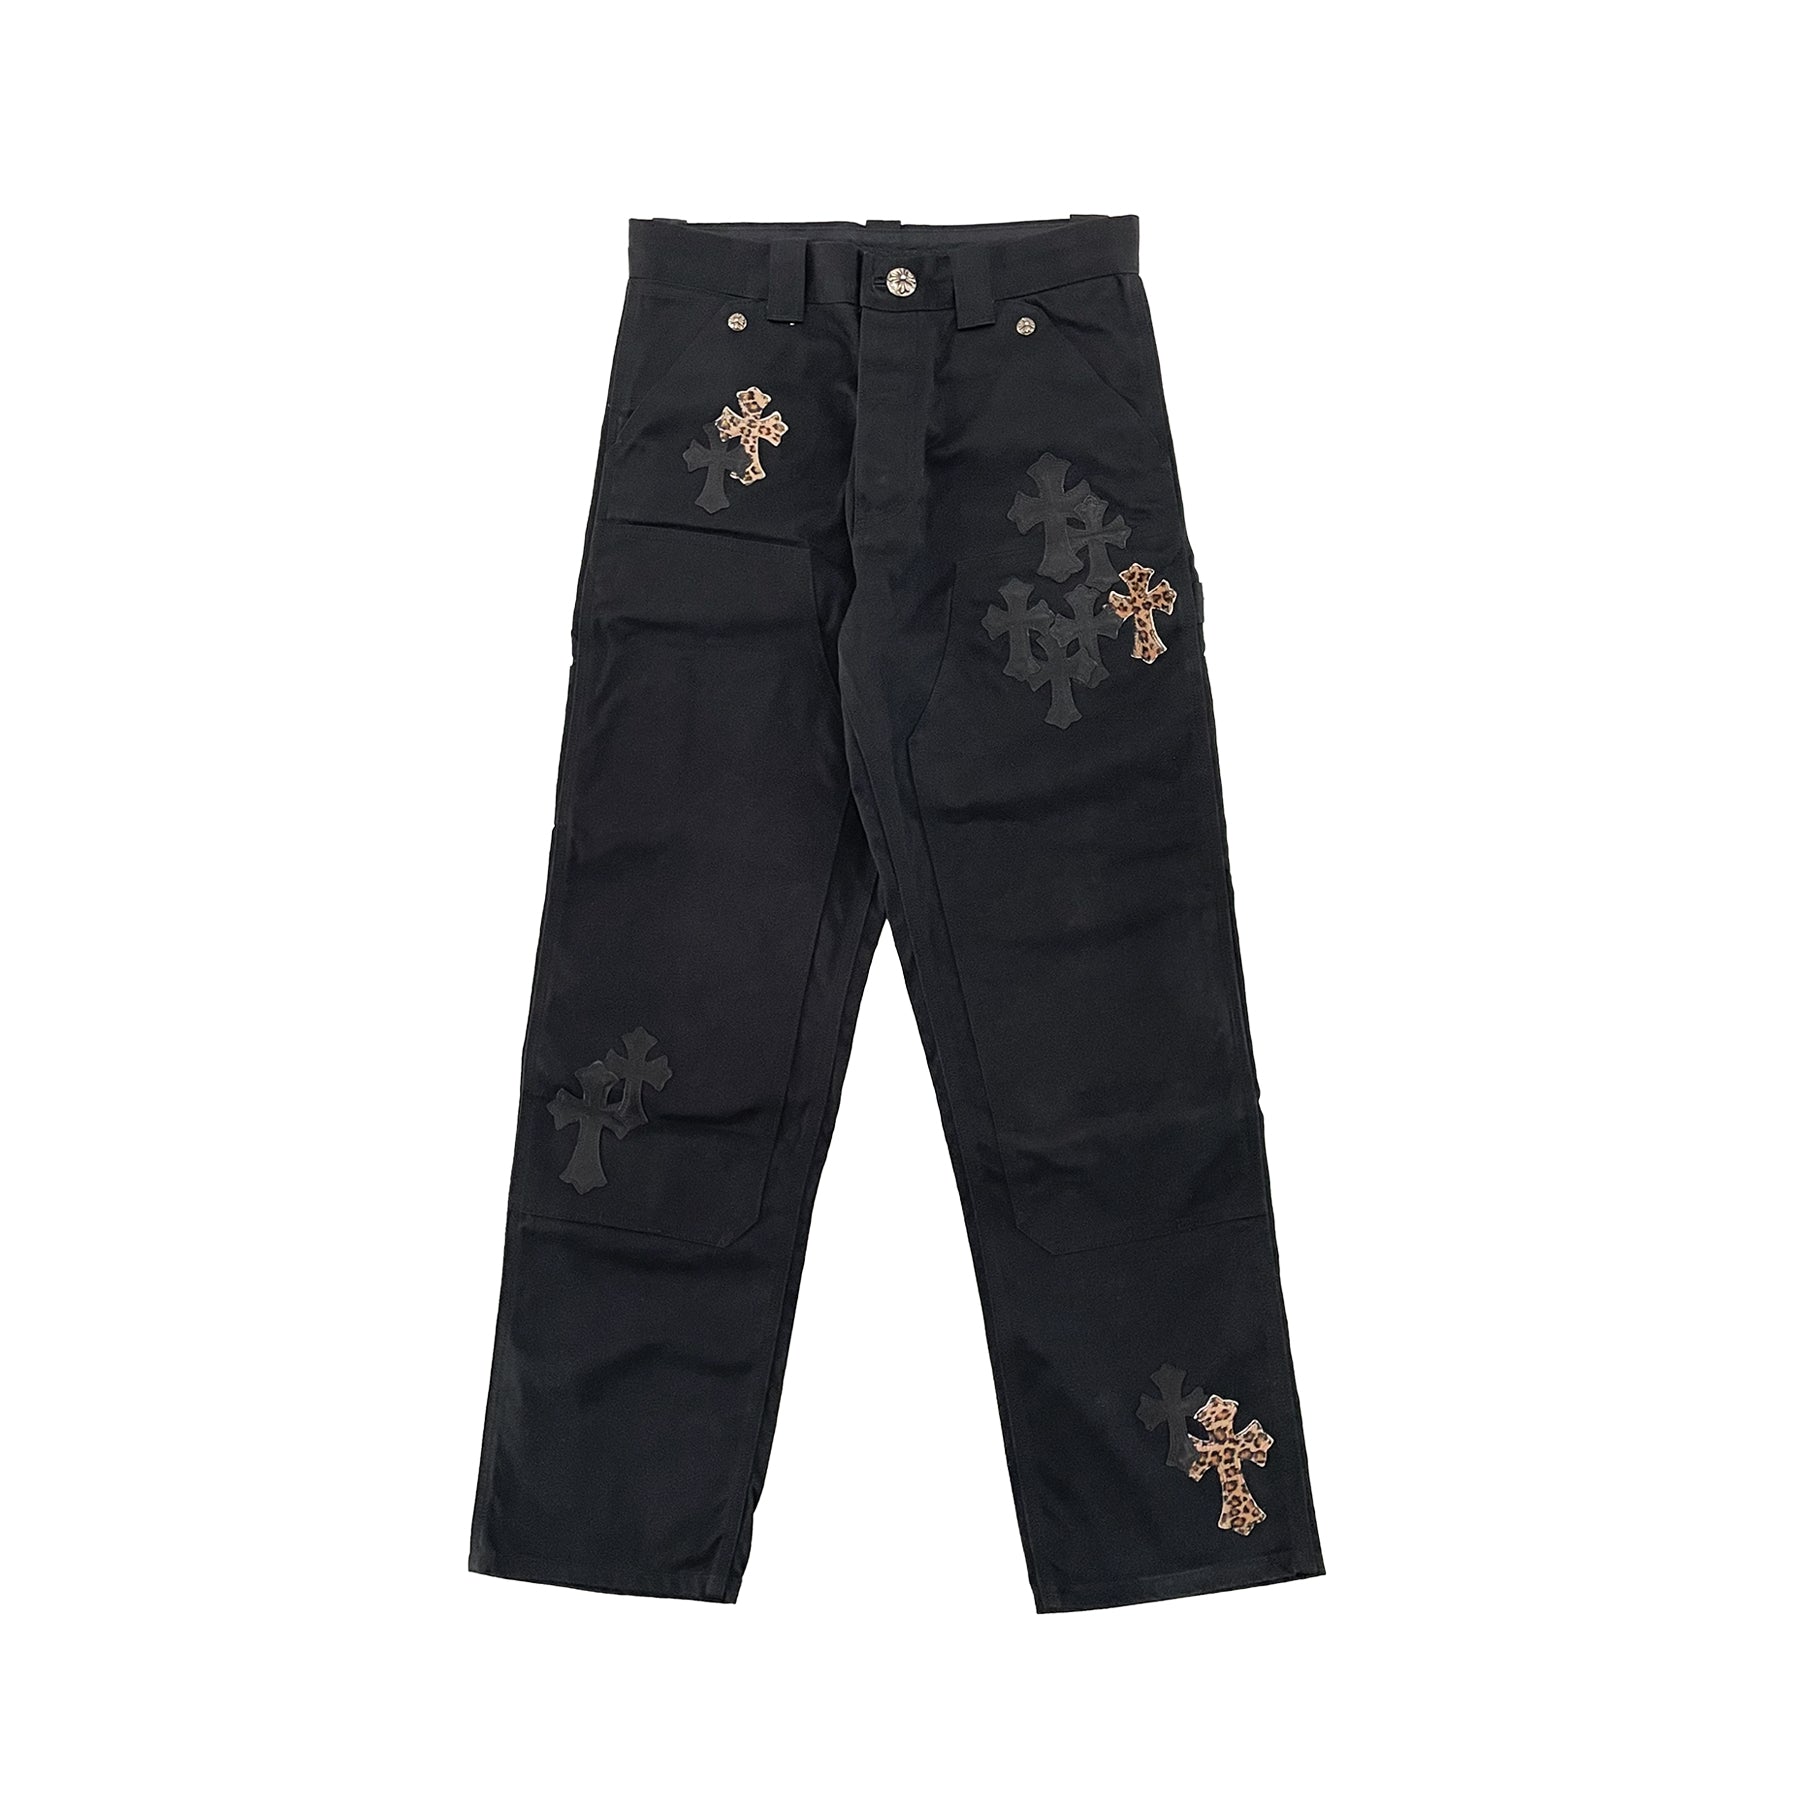 Chrome Hearts Leopard Black Leather Cross Carpenter Pants - SHENGLI ROAD MARKET